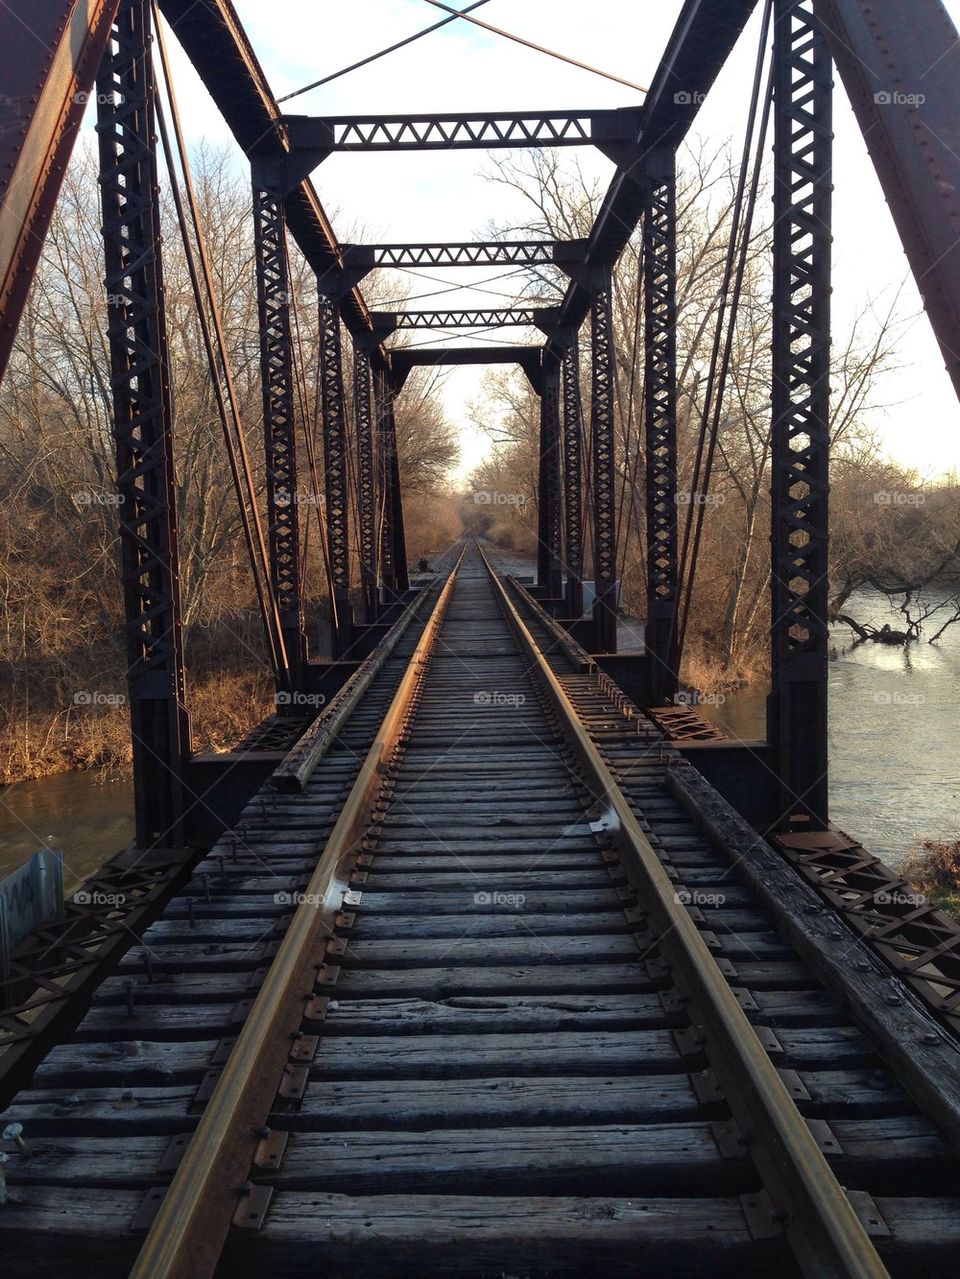 Diminishing view of railroad bridge